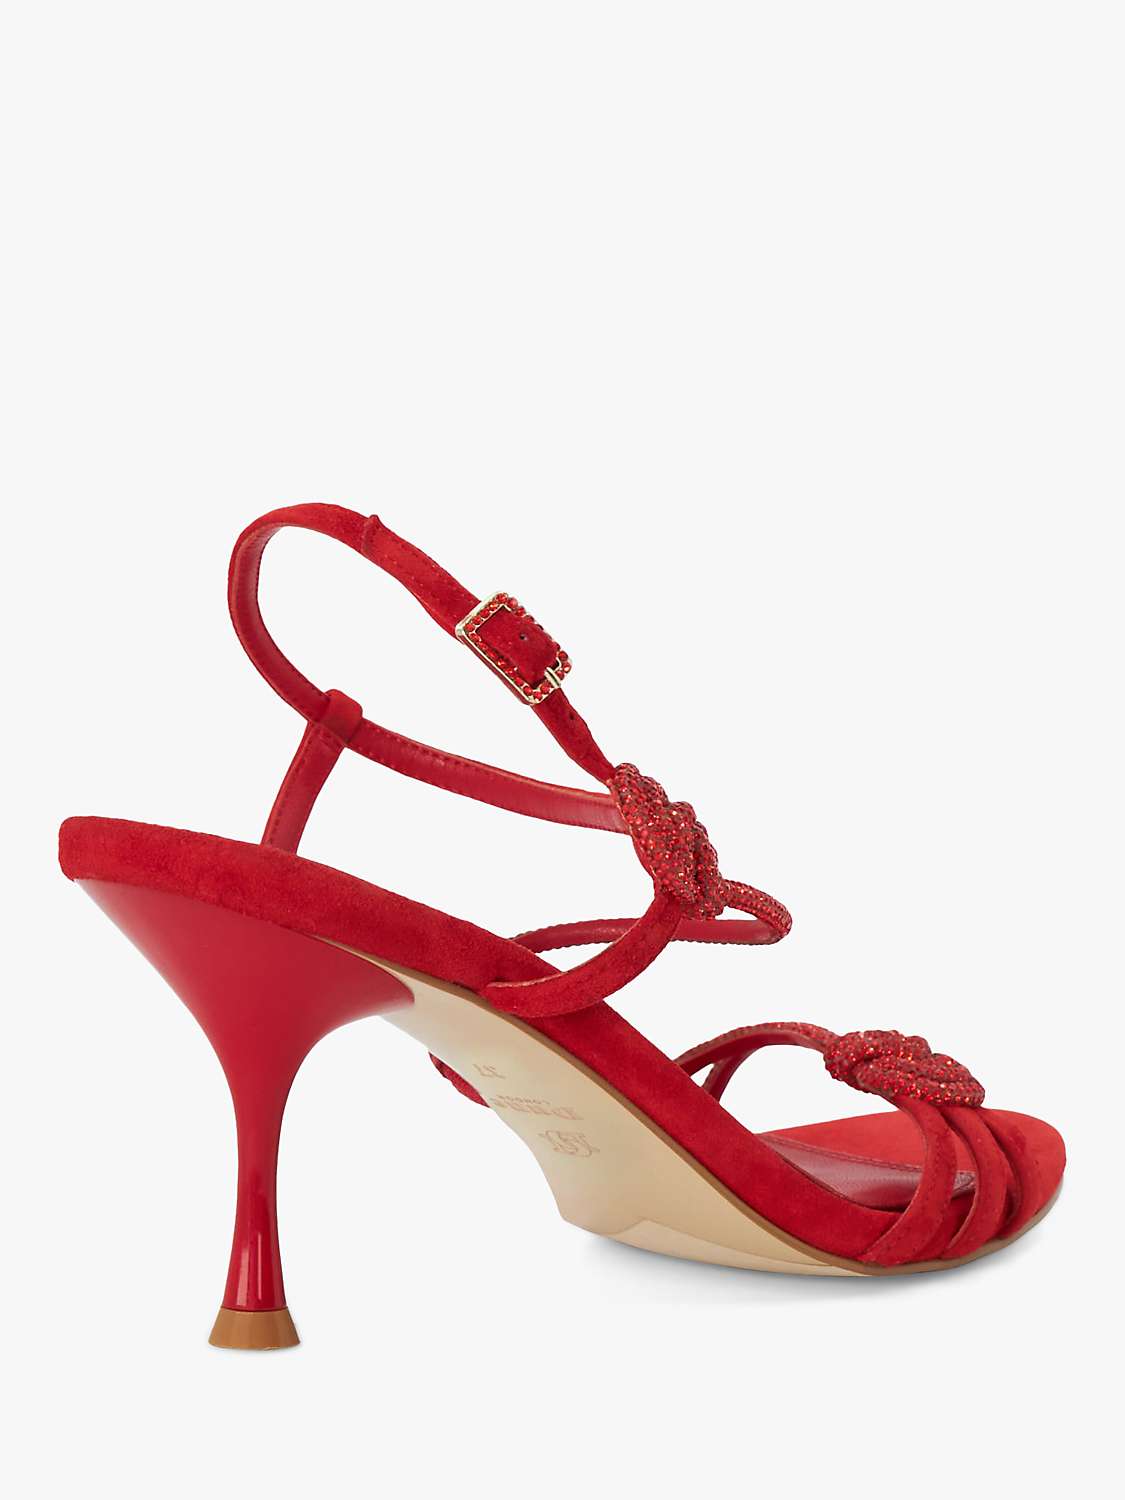 Dune Maritz Embellished Heeled Sandals, Red at John Lewis & Partners